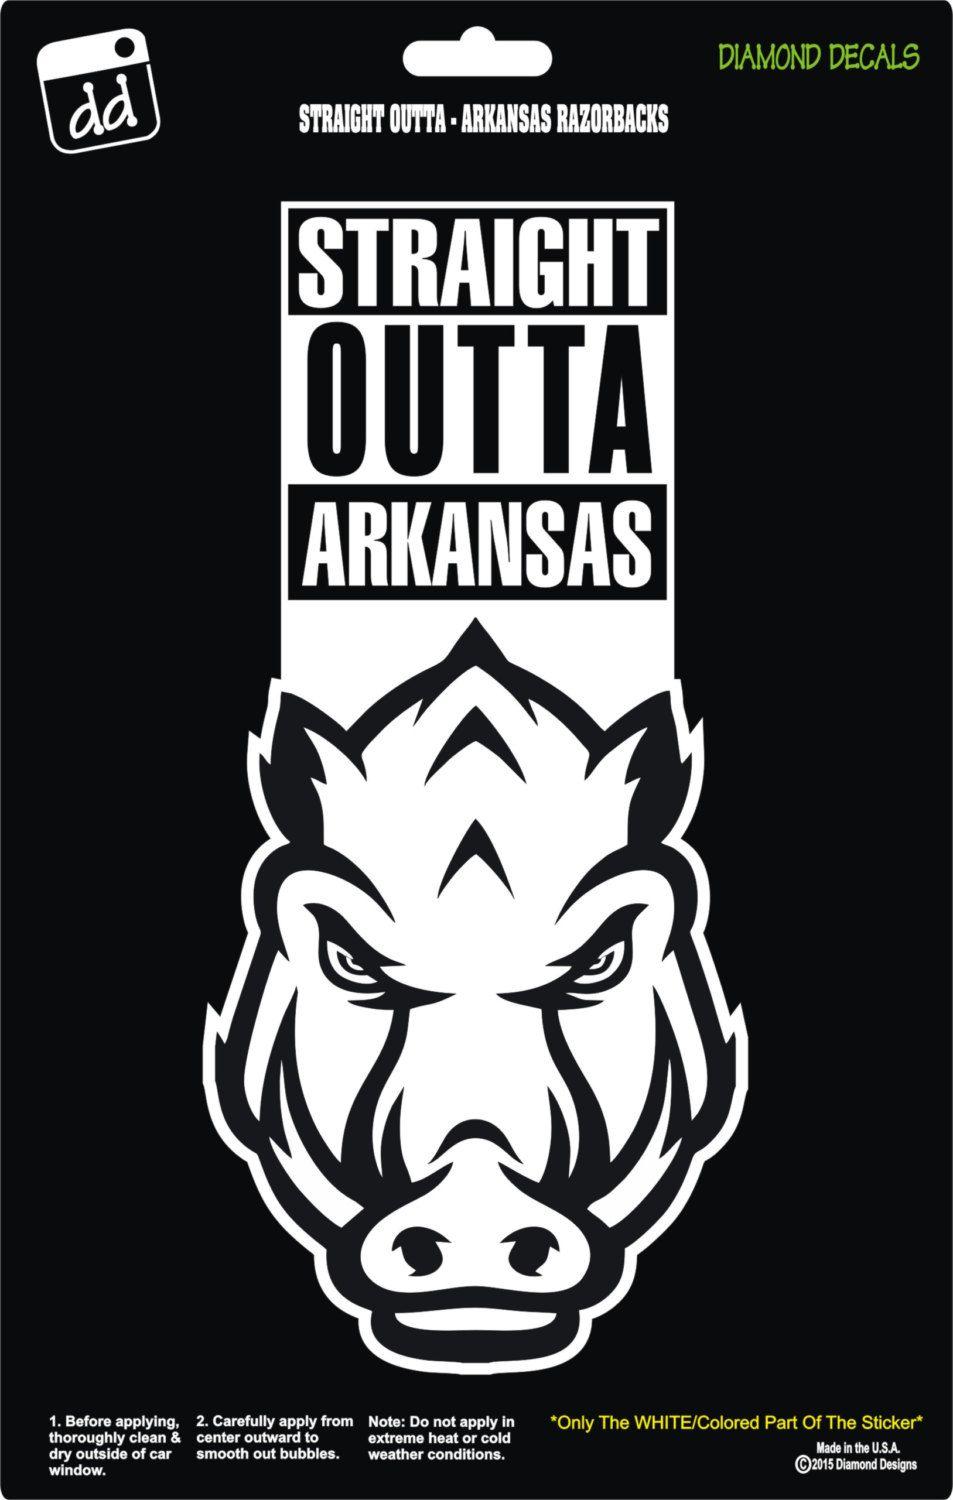 Arkansas Razorbacks Football.Can't wait for the first game.Go